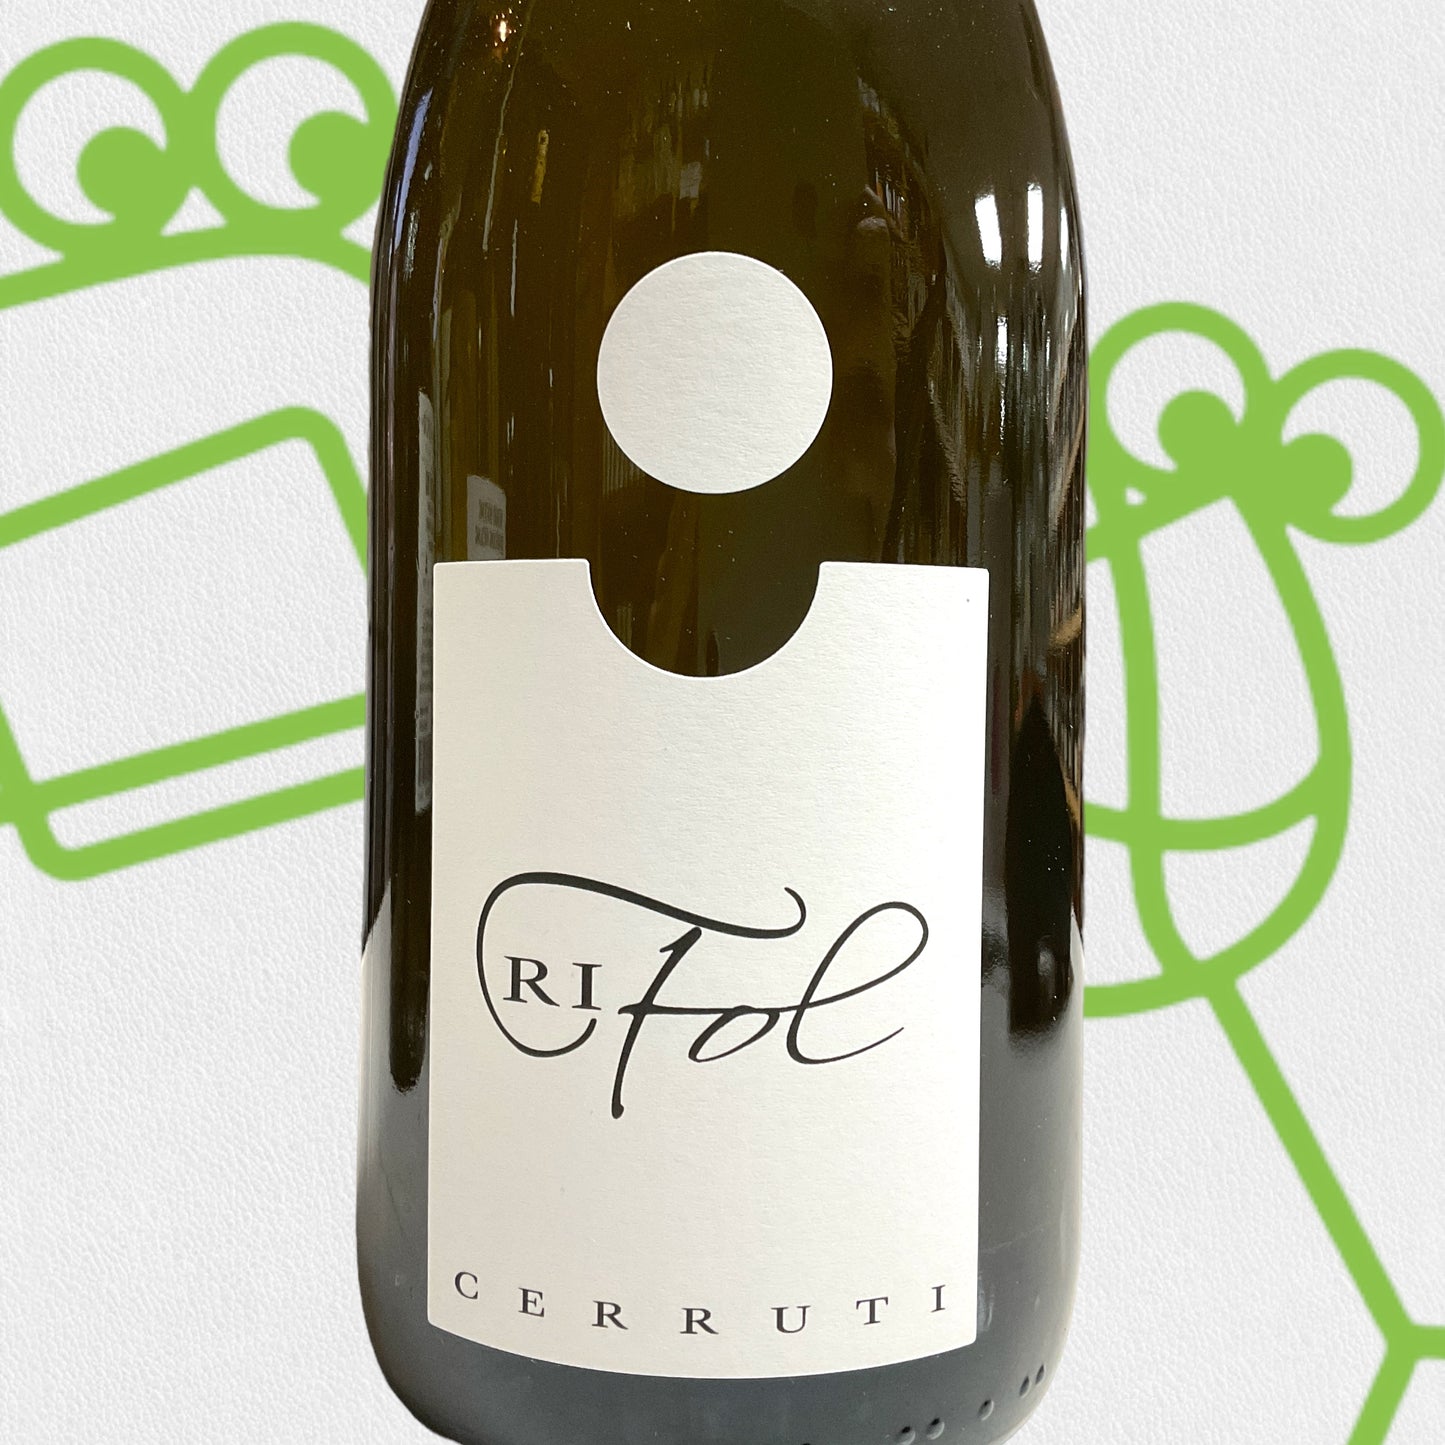 Cerruti 'Ri Fol' Pet-nat 2019 Piedmont, Italy - Williston Park Wines & Spirits